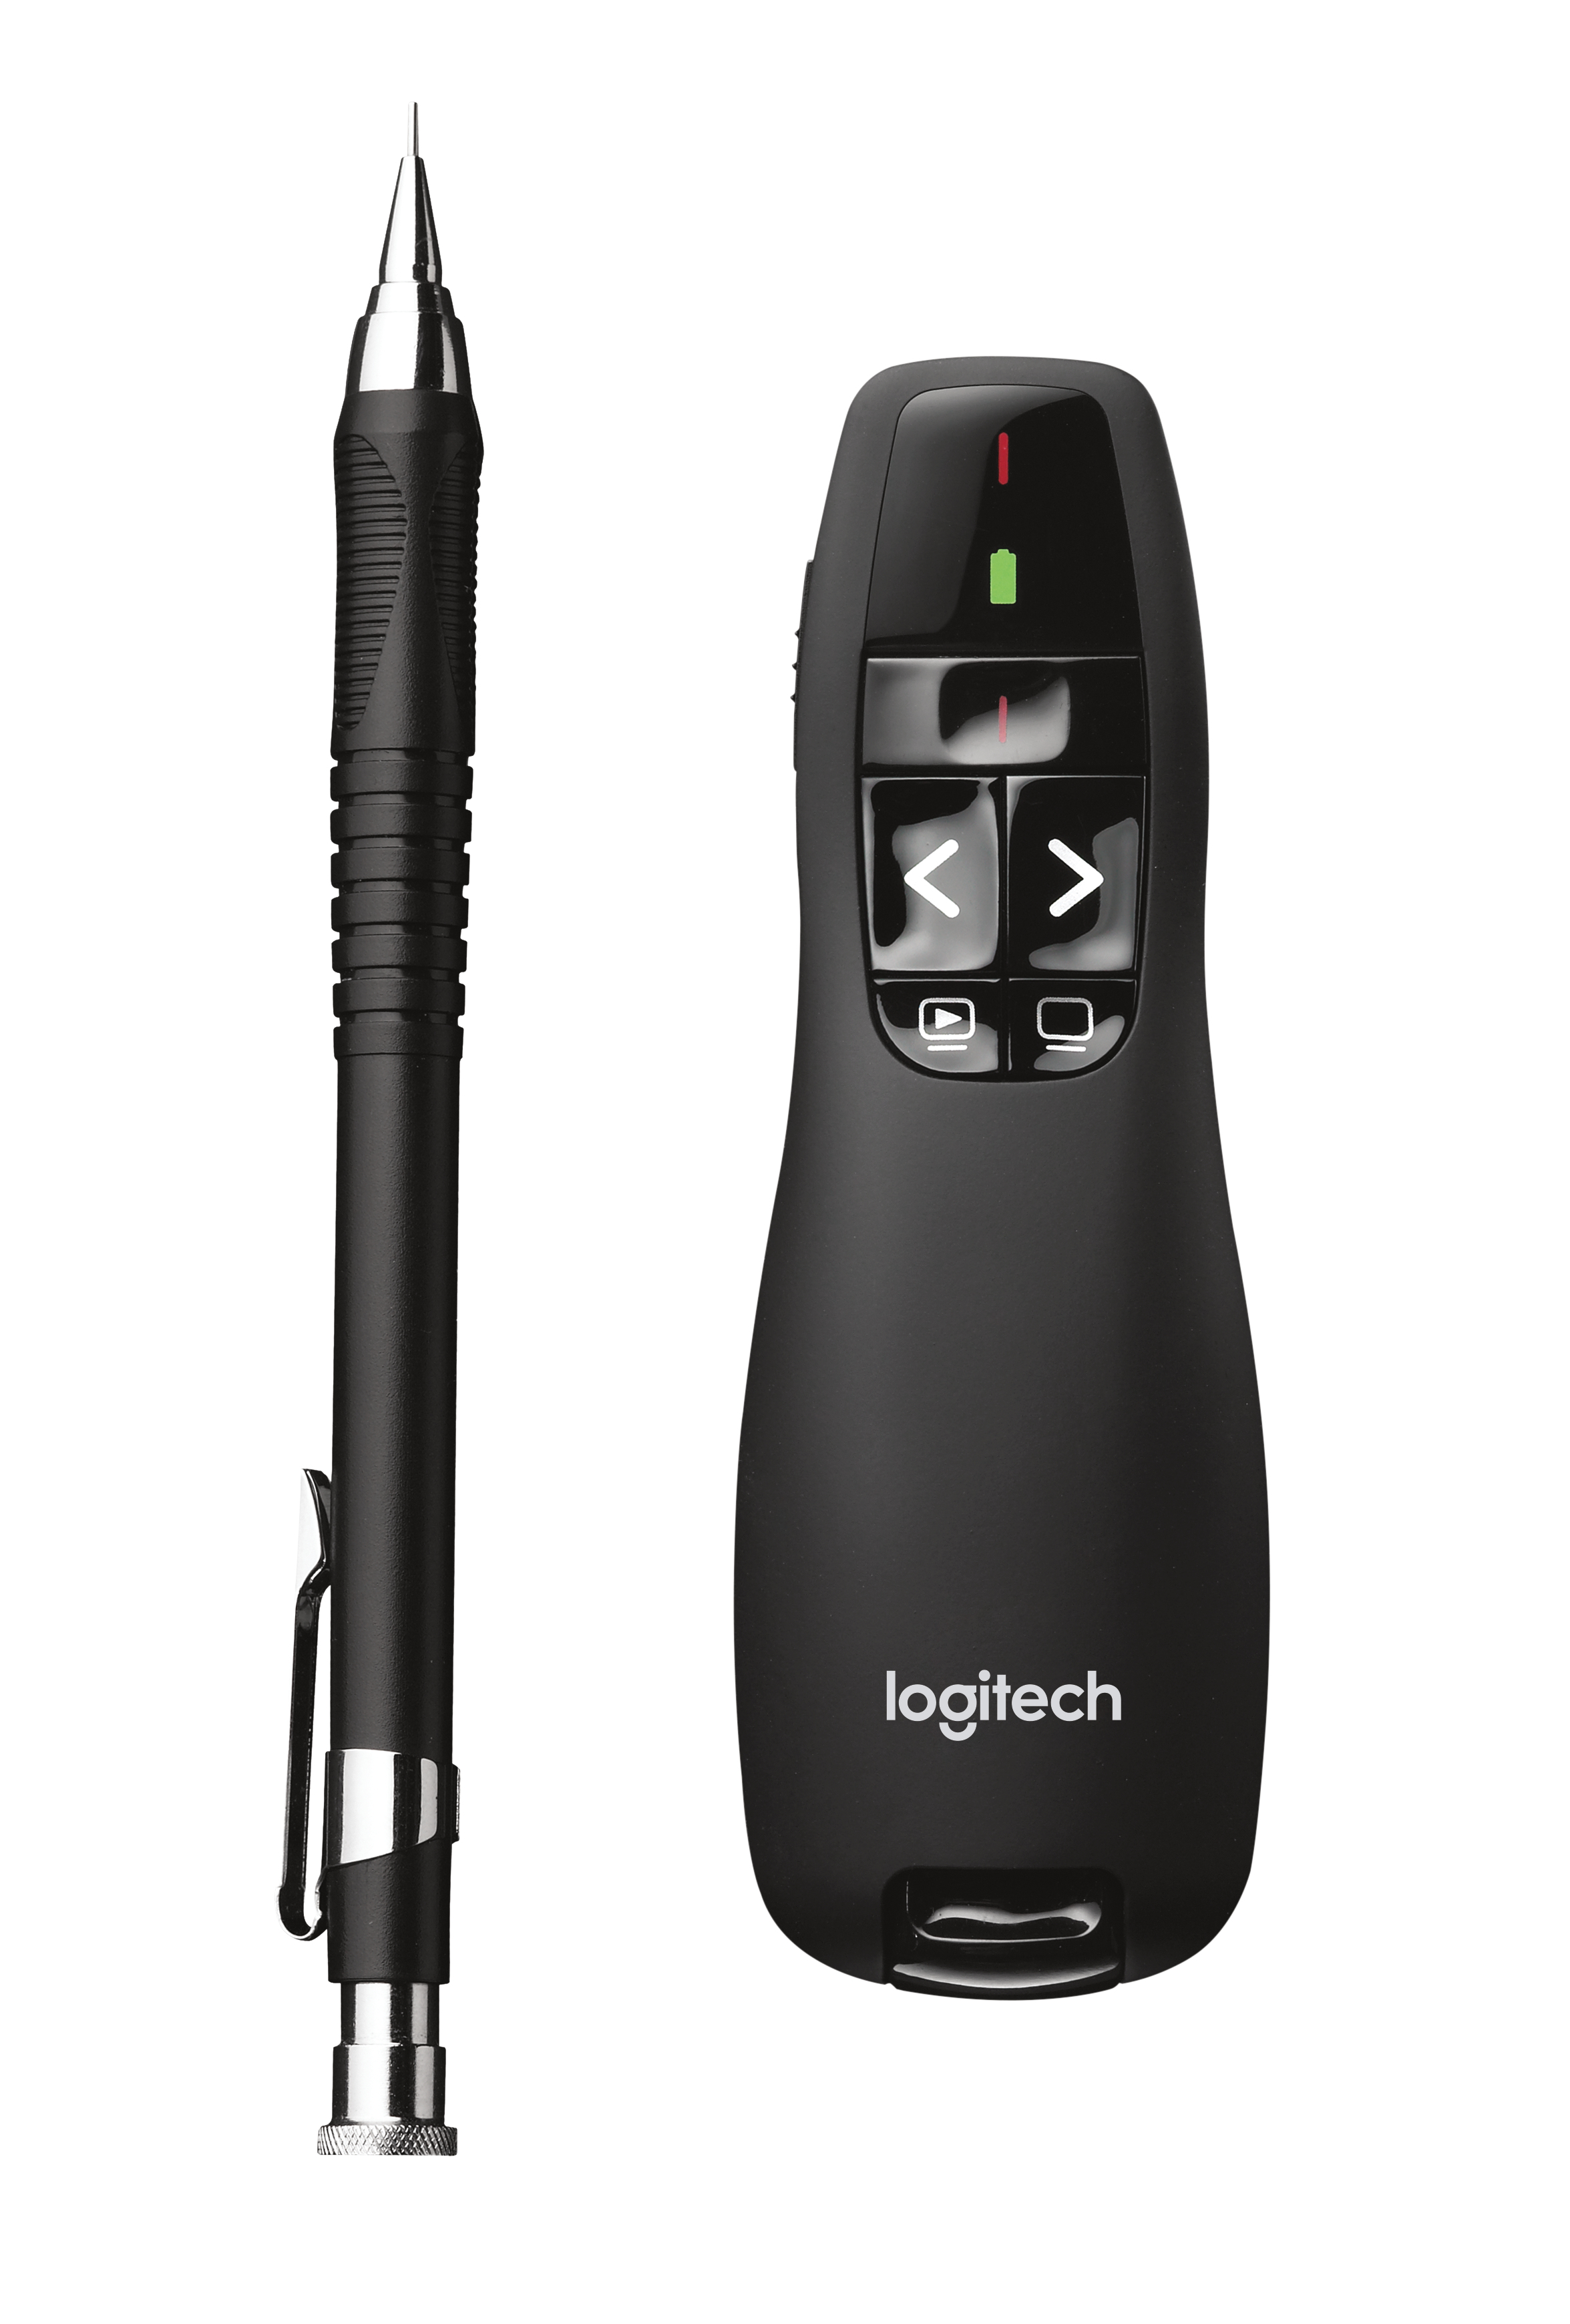 Logitech Wireless Presenter R400 910-001356 - C2000